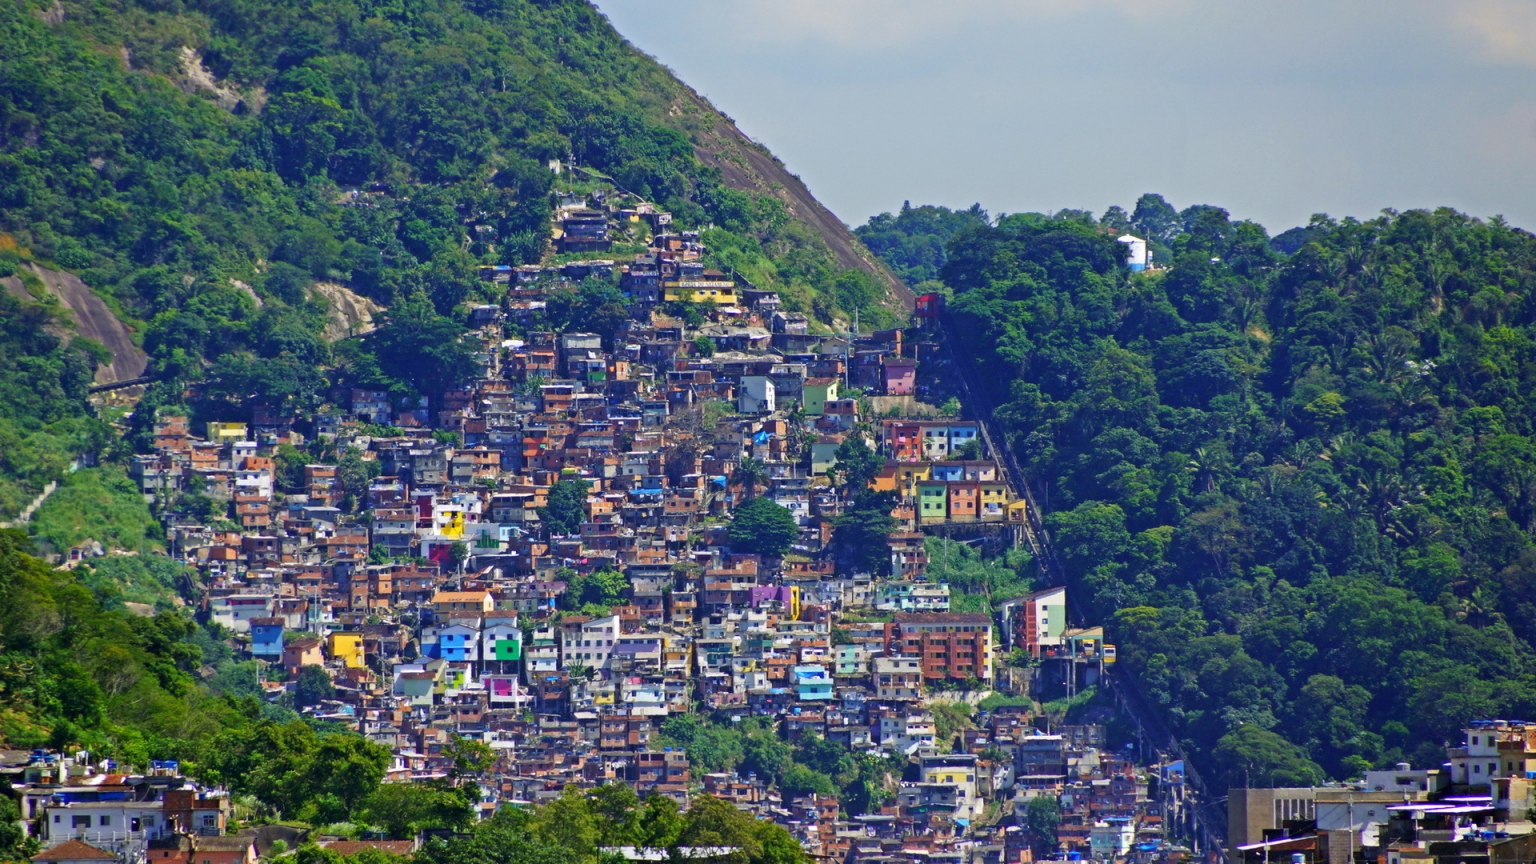 Rio de Janeiro Mountains Houses for 1536 x 864 HDTV resolution